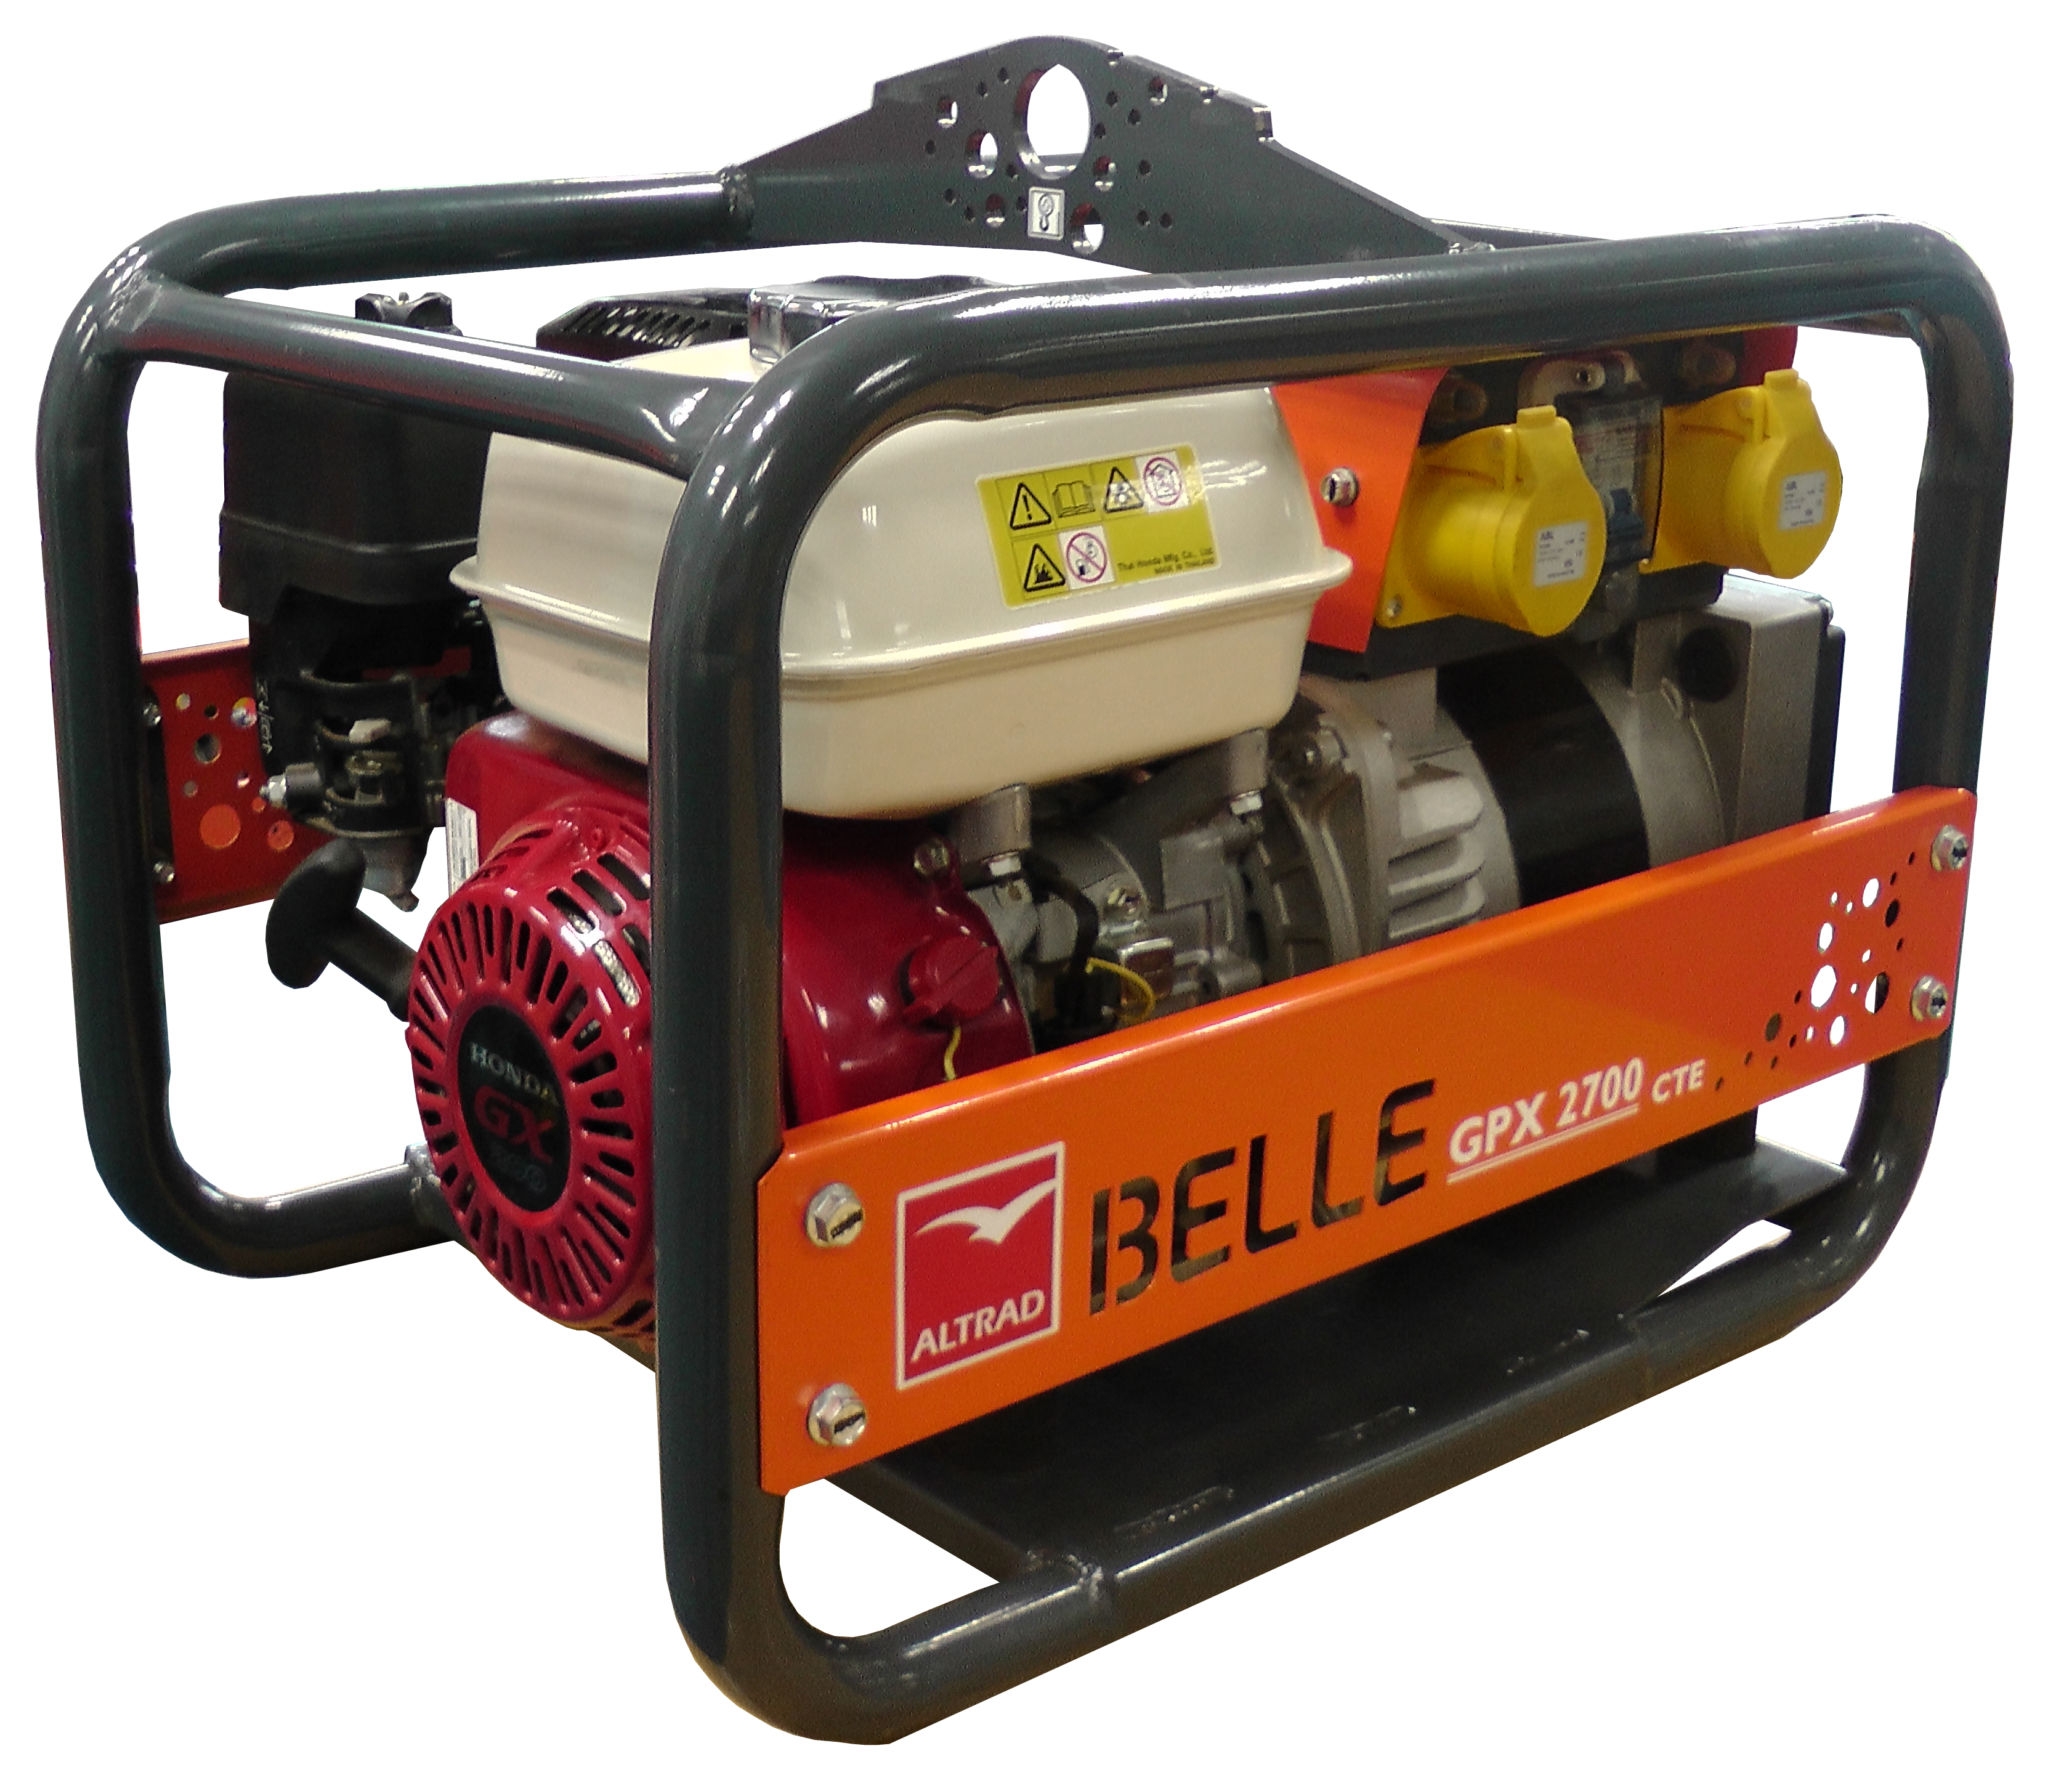 ALTRAD Belle GPX Power Generators – GPX 2700 CTE – Honda GX200 Petrol